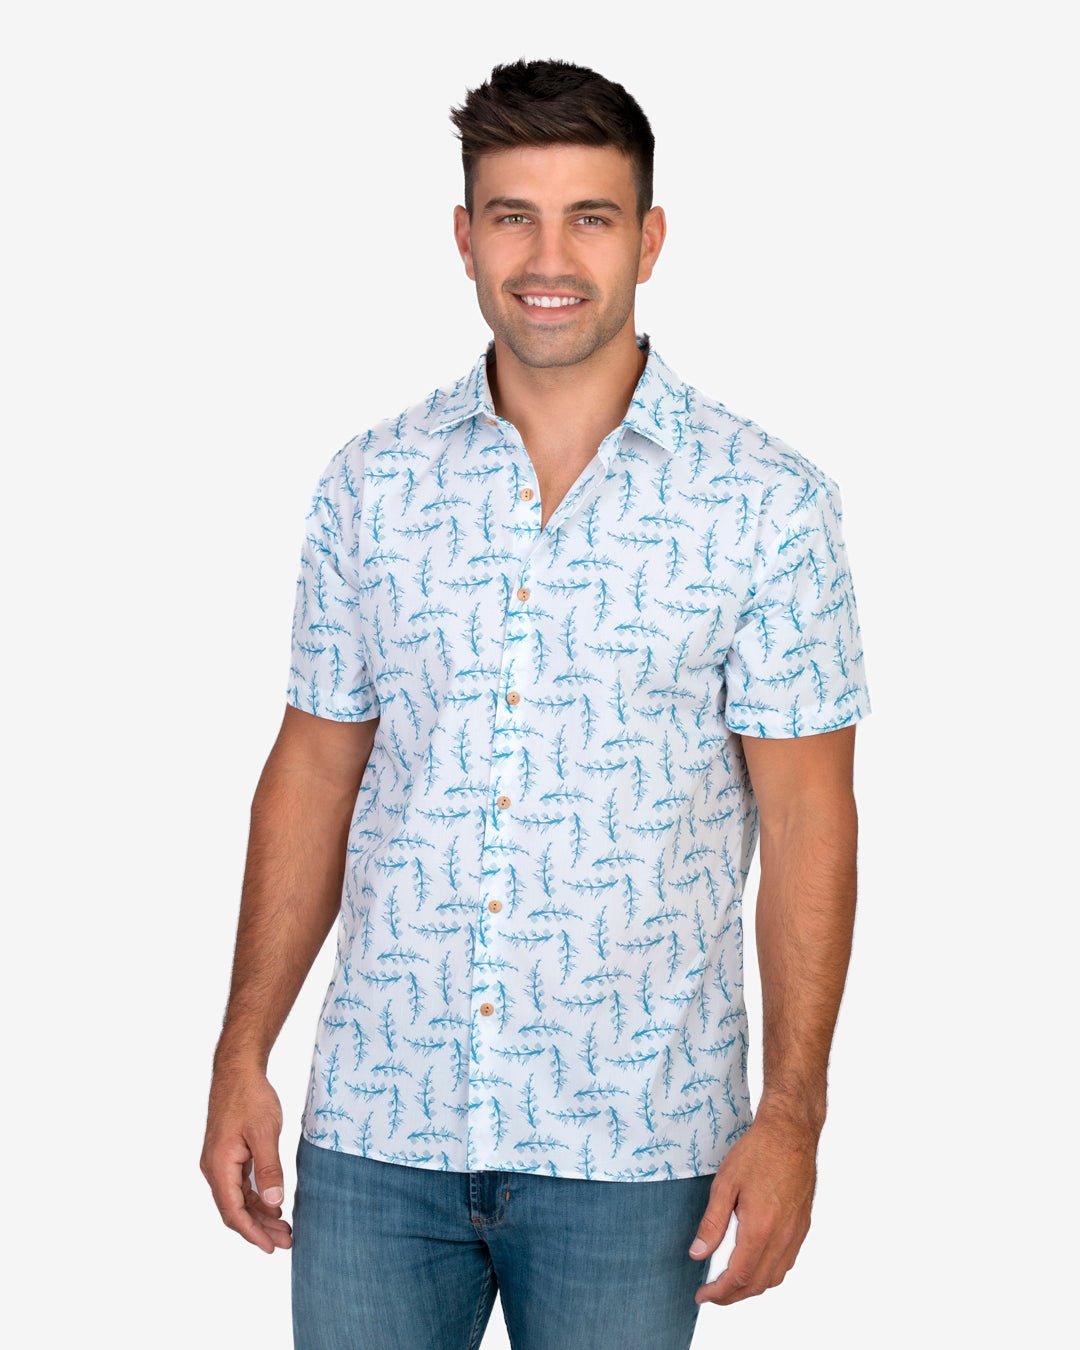 Toxo - Camisa Hawaiana Hombre Inspirada en Gratis